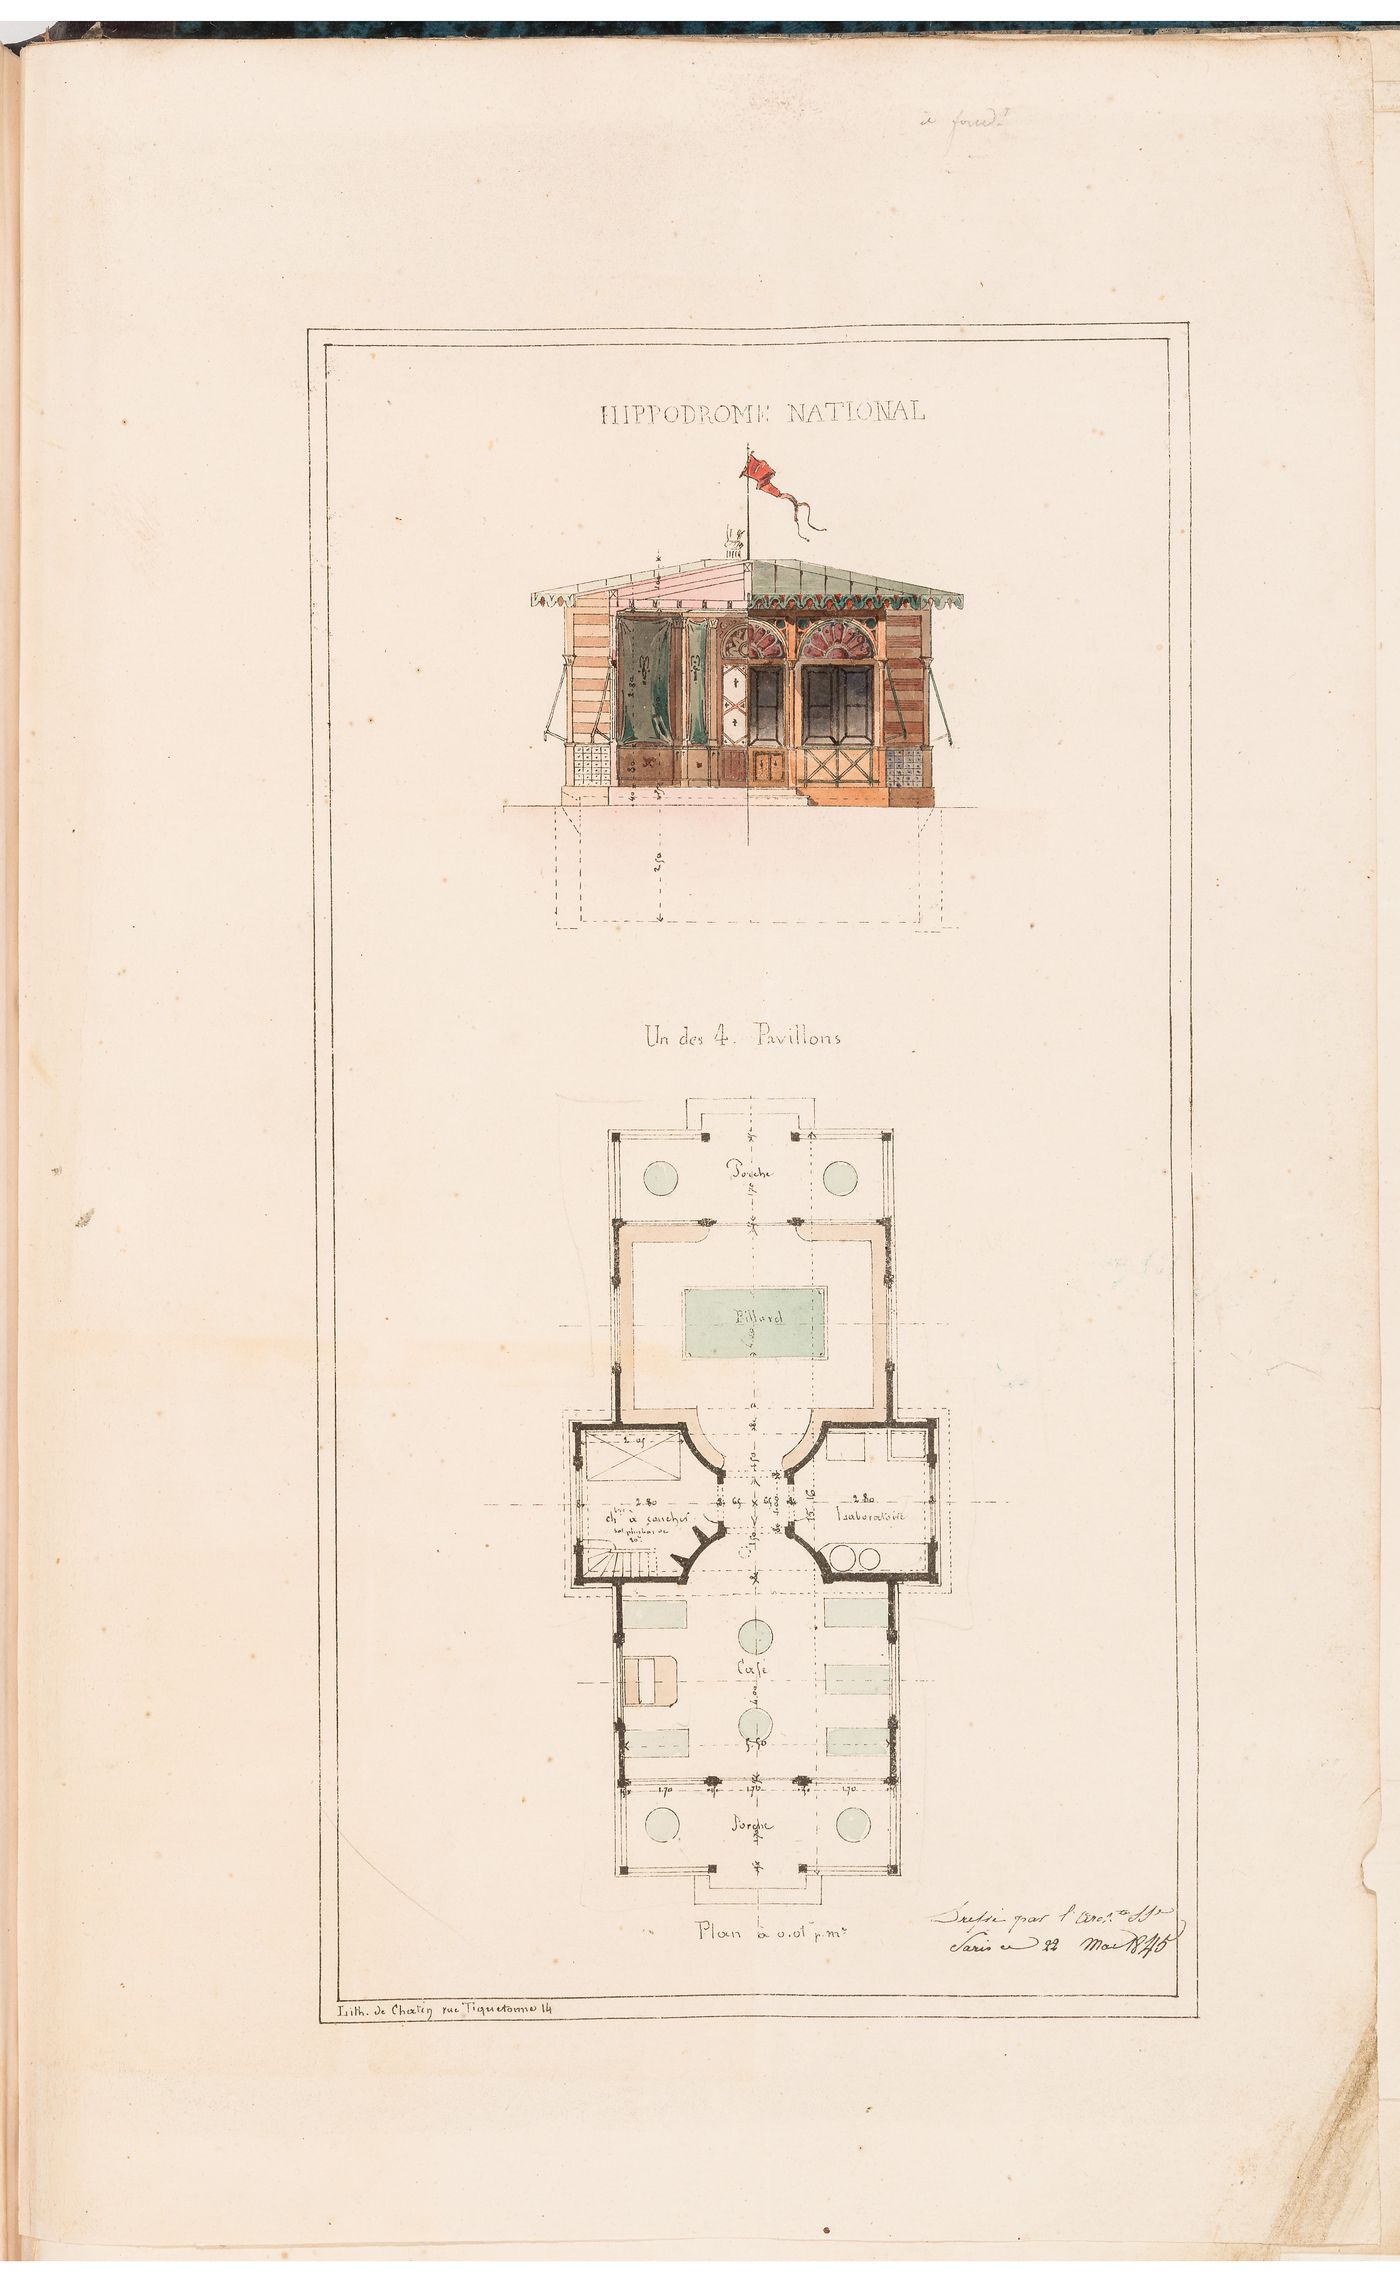 Hippodrome national, Paris: Elevation and plan for a pavilion